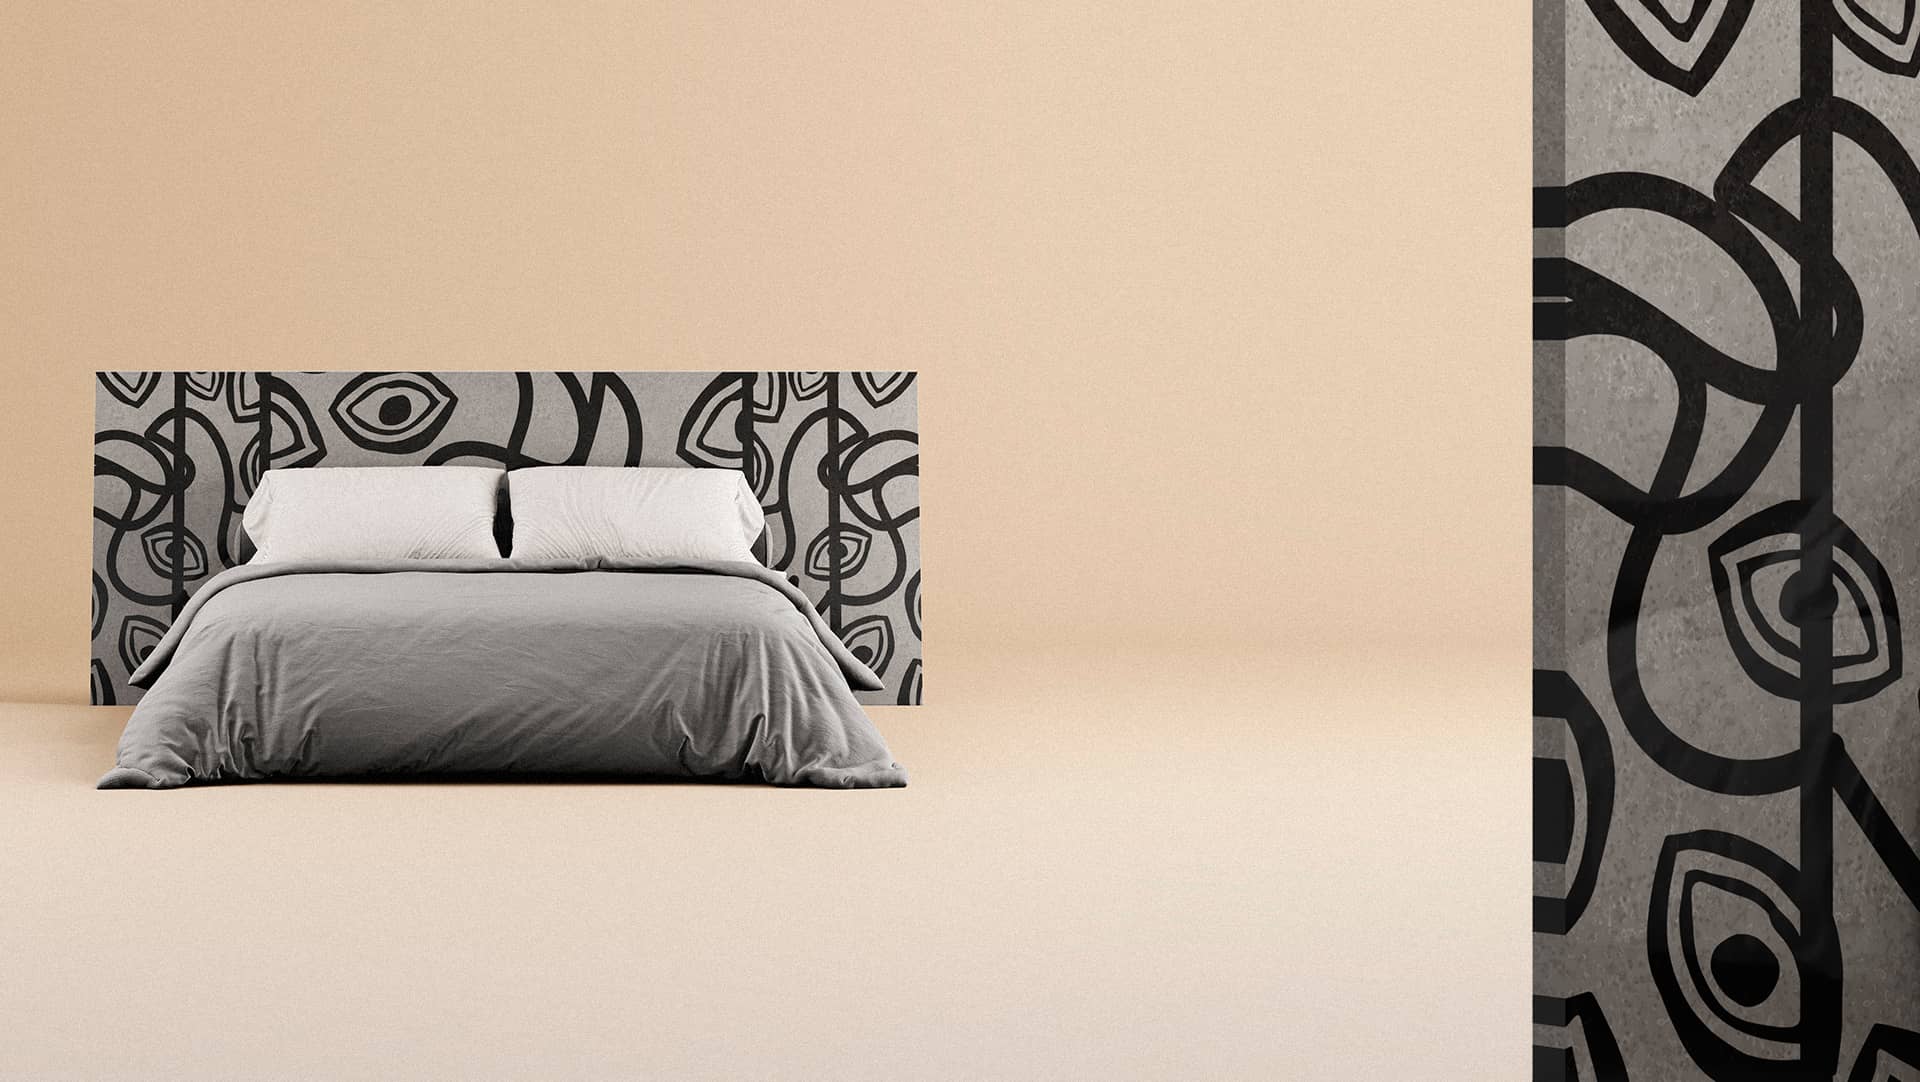 Unique furniture design for distinctive interiors by HOMMÉS Studio